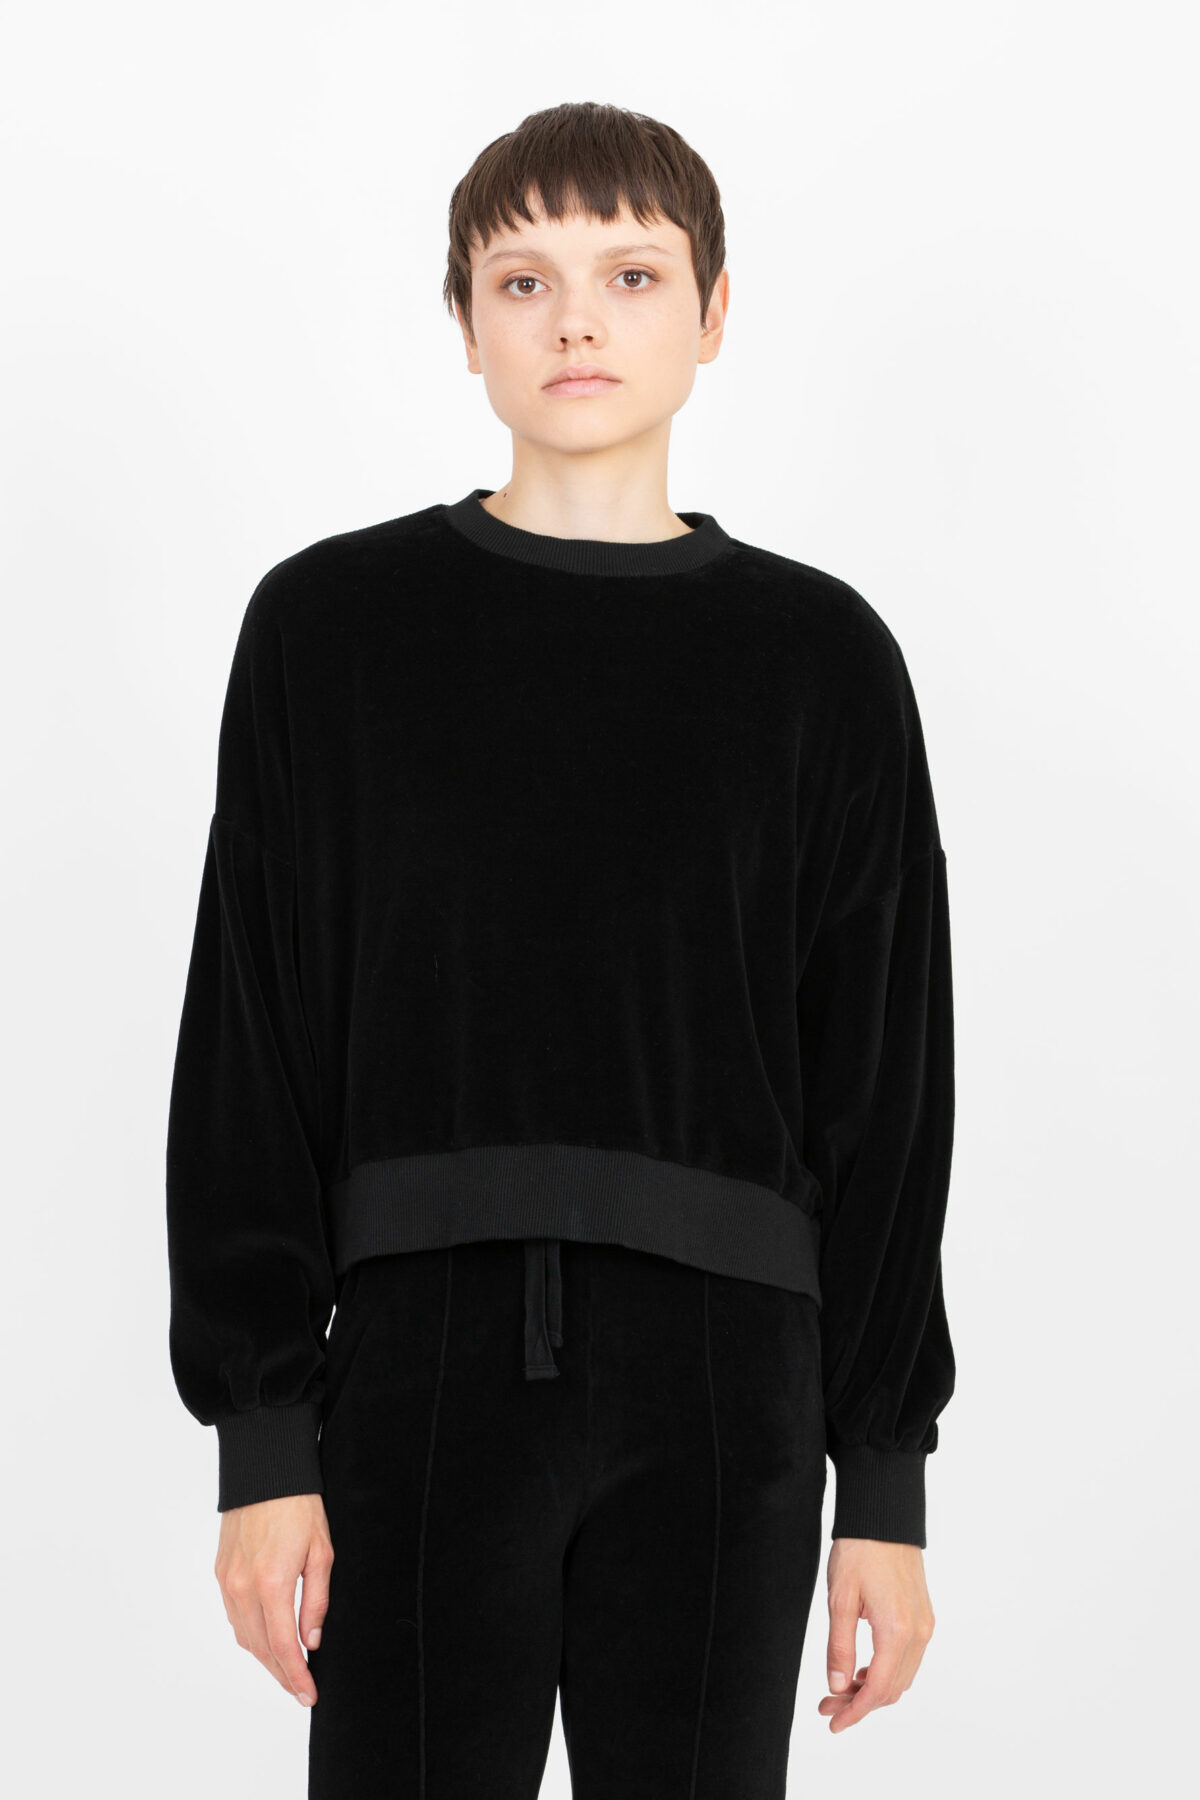 b74541-velour-black-sweatershirt-raglan-deha-matchboxathens